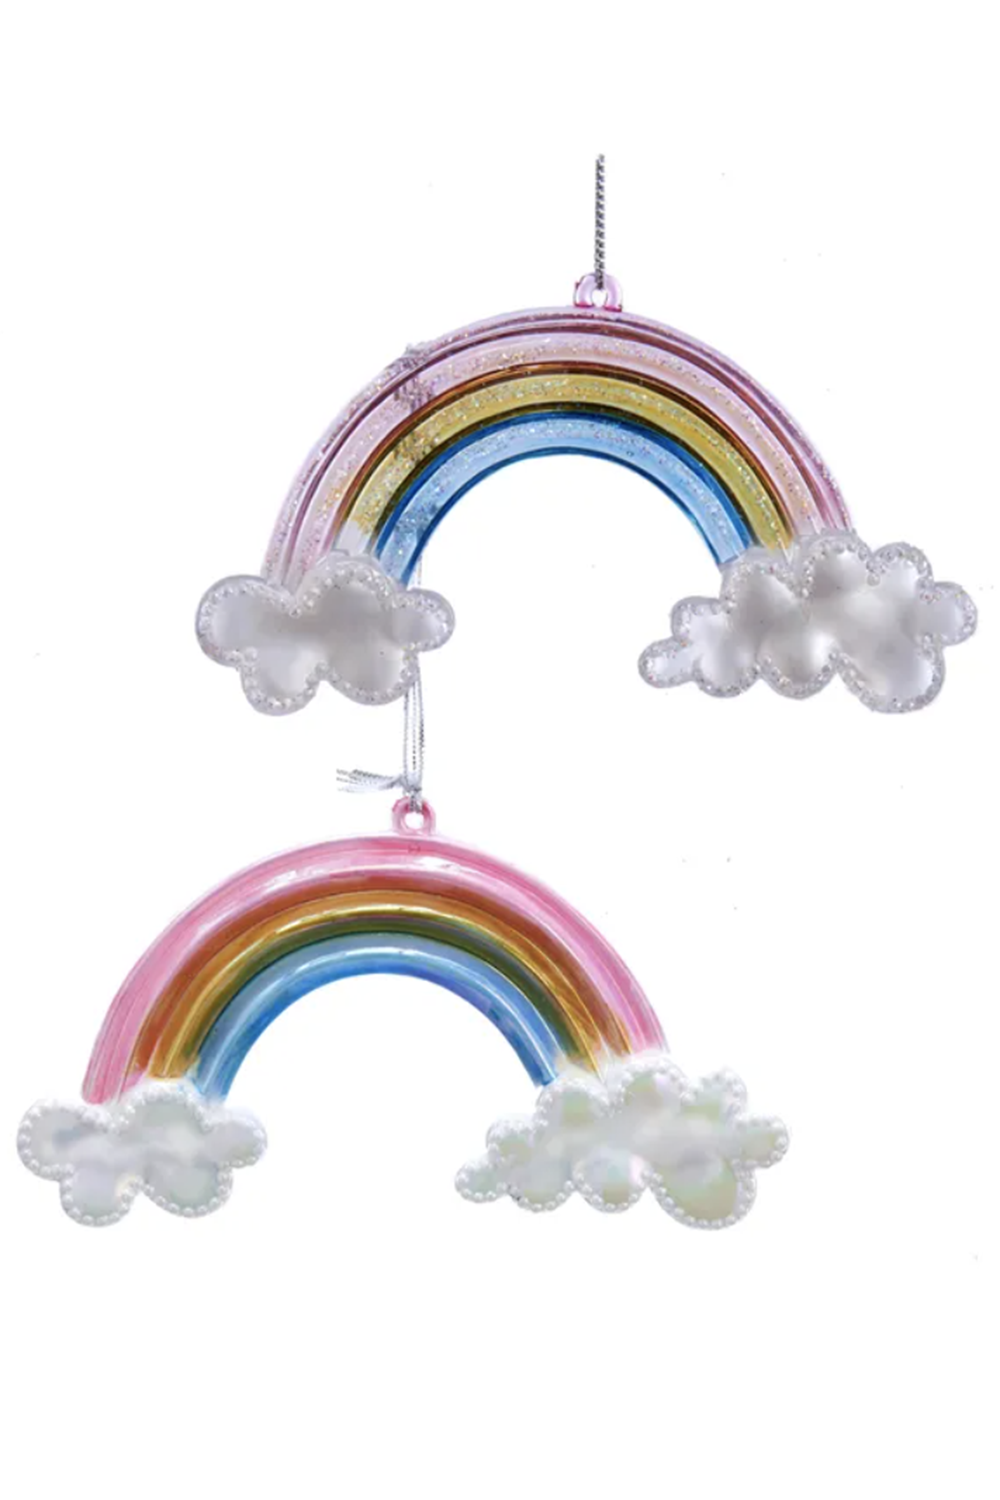 Funky Ornament - Pastel Rainbow